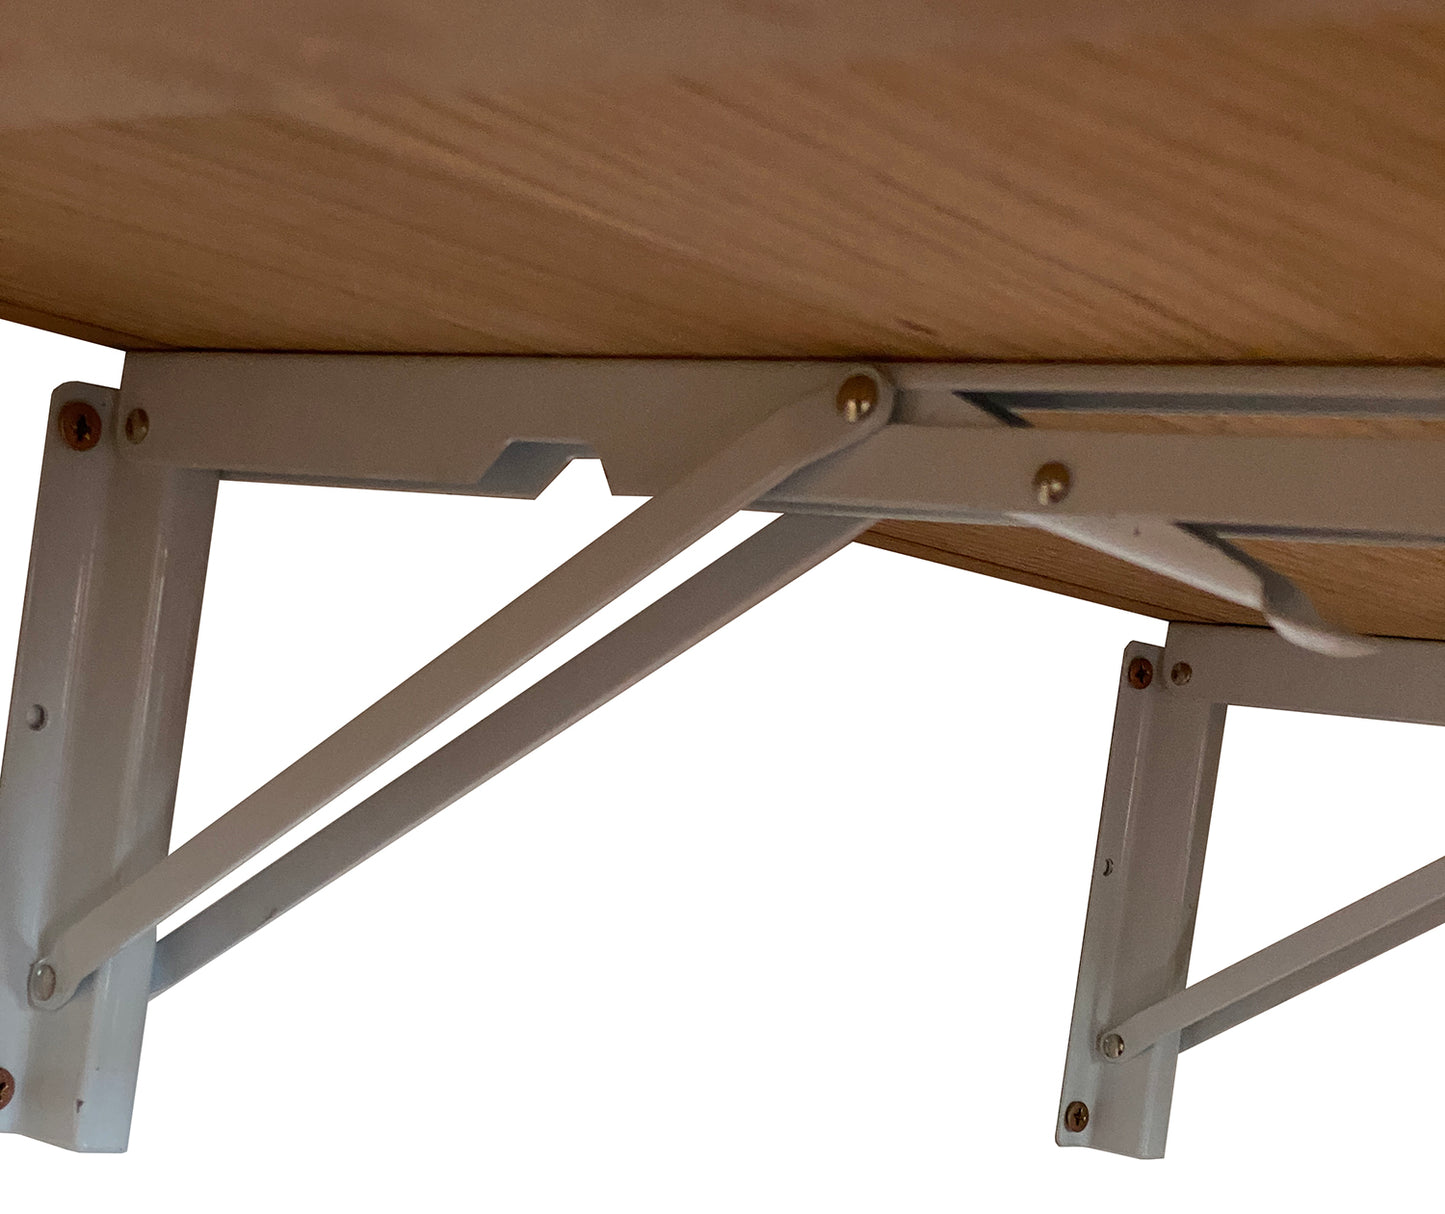 Work from home desk the ultimate space saver, Solid Oak Veneer, drop down table